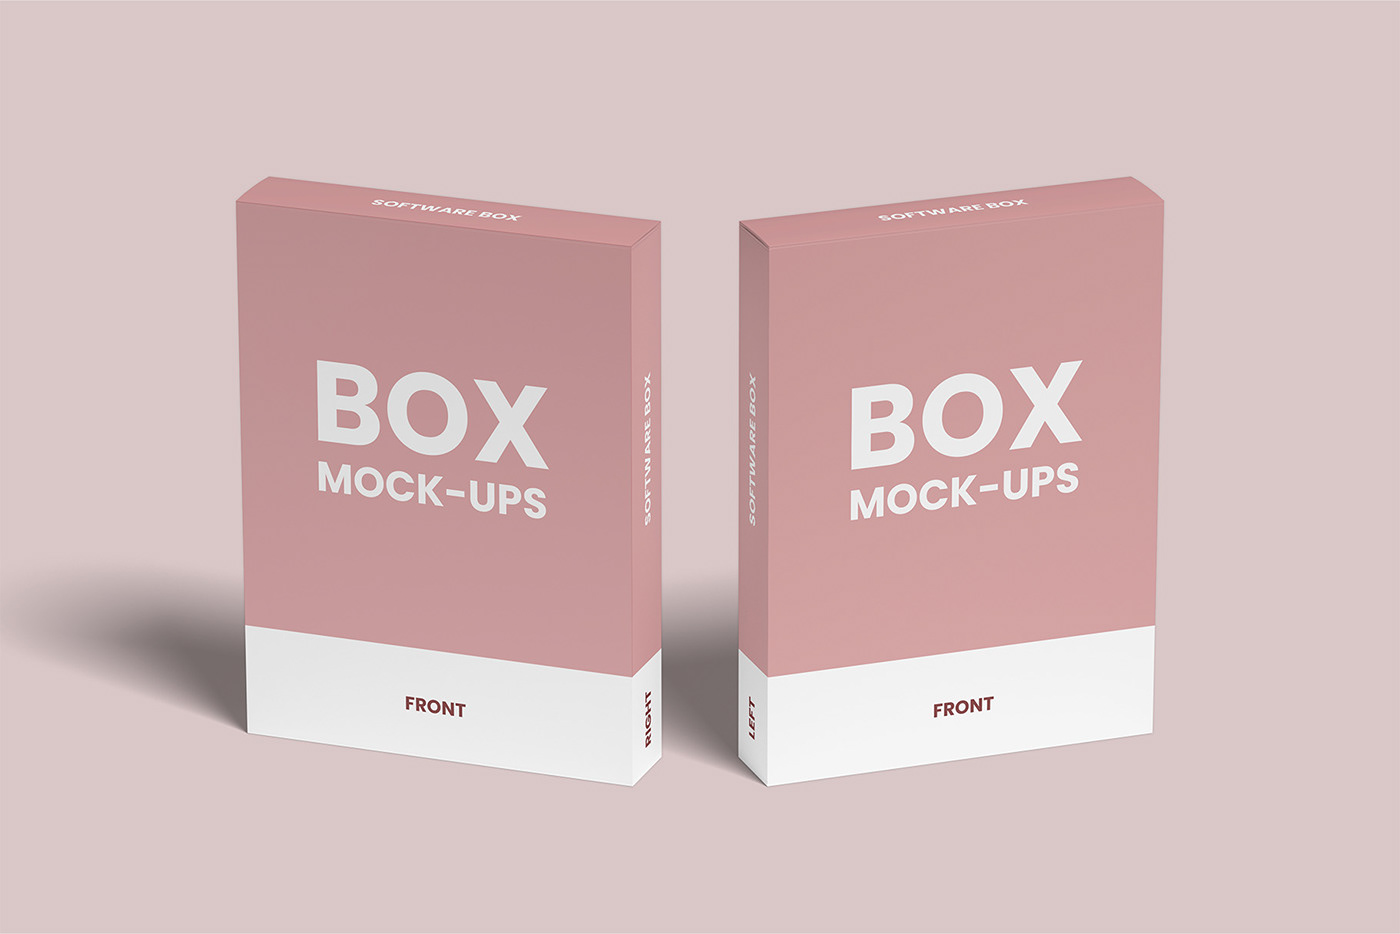 Mockup mockup design mockup psd mockup free box box design box packaging Packaging packaging design packaging mockup